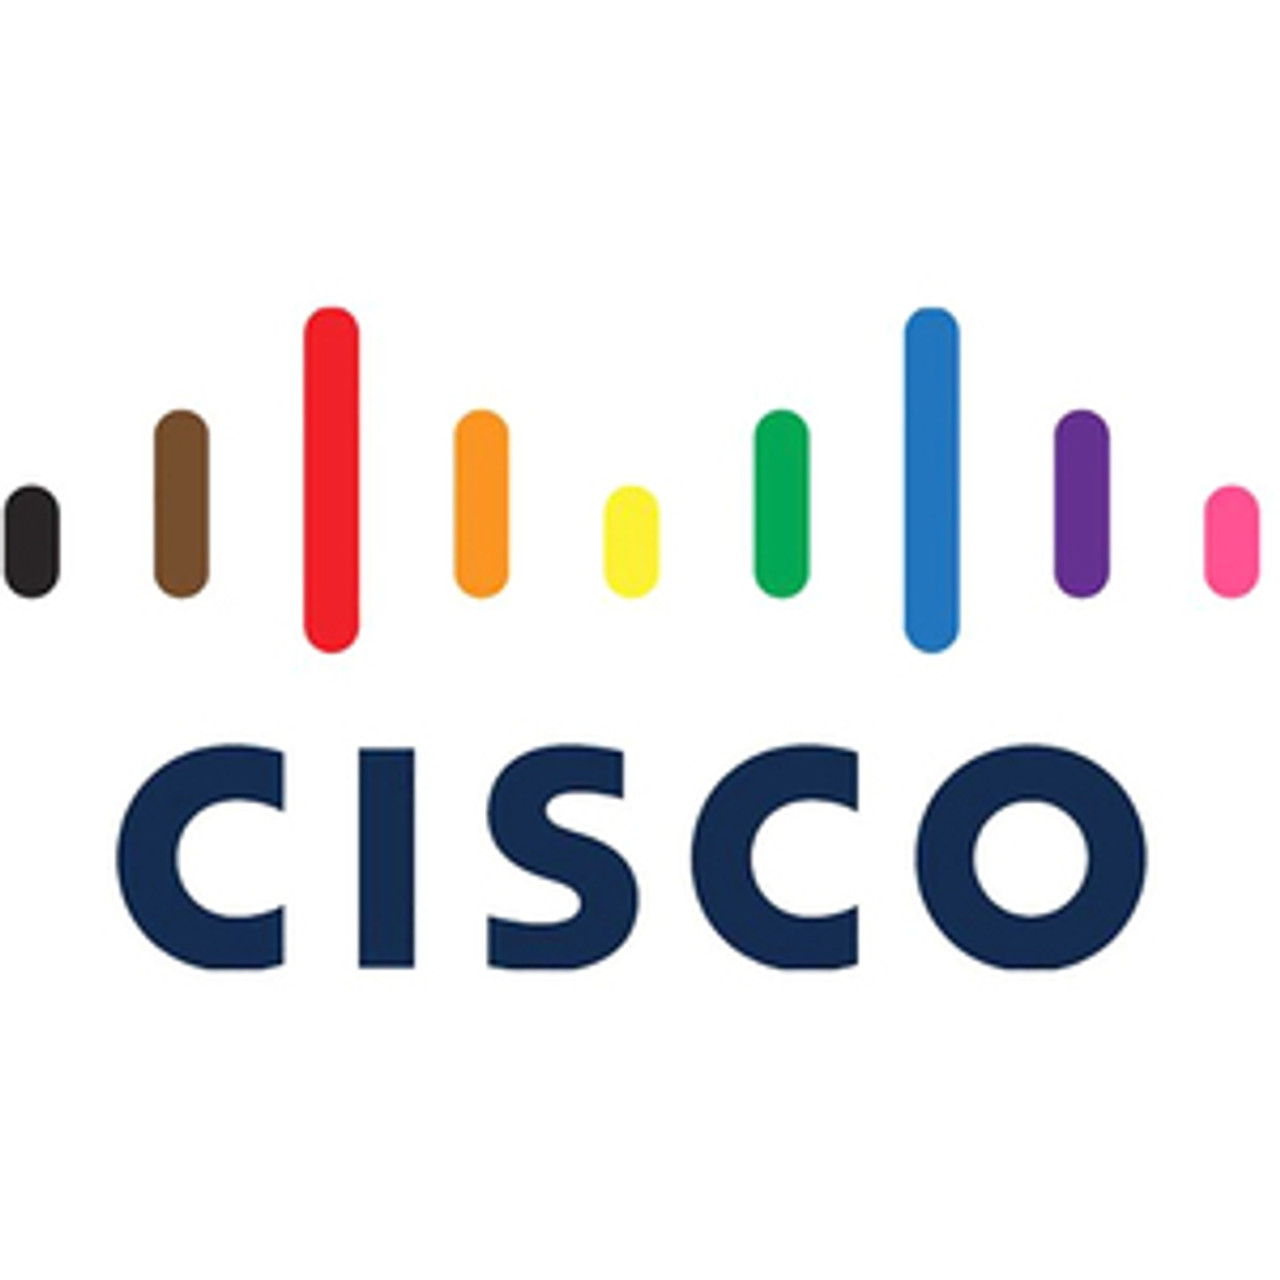 Cisco 600 GB Solid State Drive - Internal - SATA